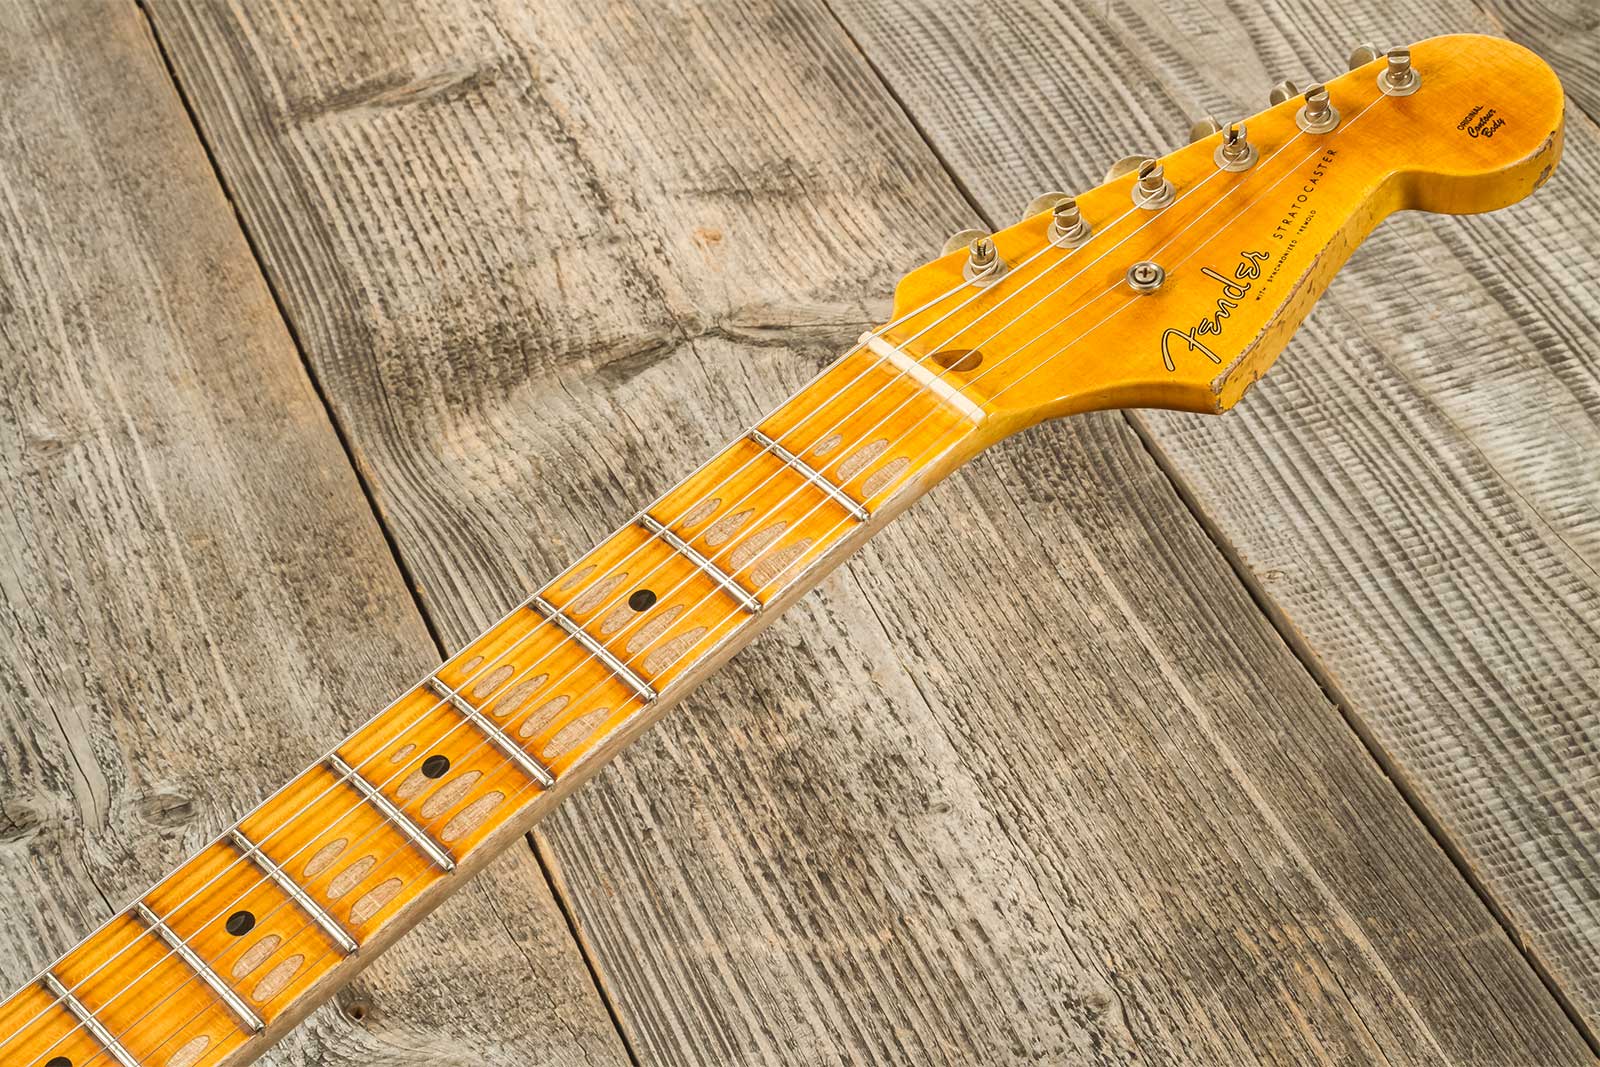 Fender Custom Shop Strat 1954 70th Anniv. 3s Trem Mn #xn4308 - Heavy Relic Wide Fade 2-color Sunburst - Guitarra eléctrica con forma de str. - Variati